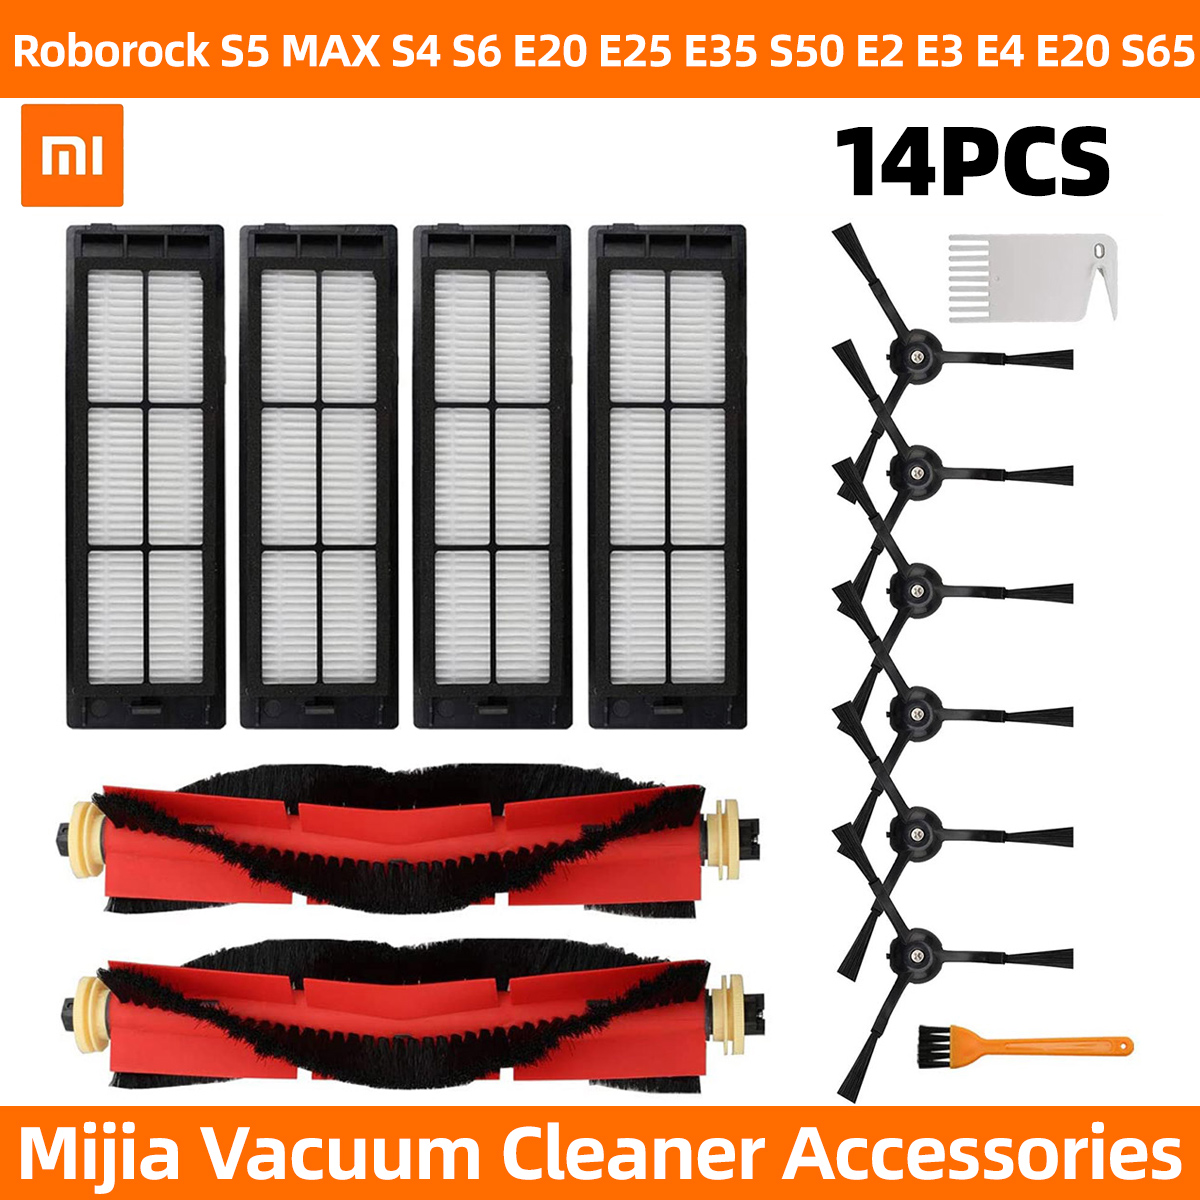 12pcs-Replacements-for-Roborock-S5-MAX-S6-S50-E20-E25-E35-Xiaomi-Mijia-Vacuum-Cleaner-Parts-Accessor-1944161-2